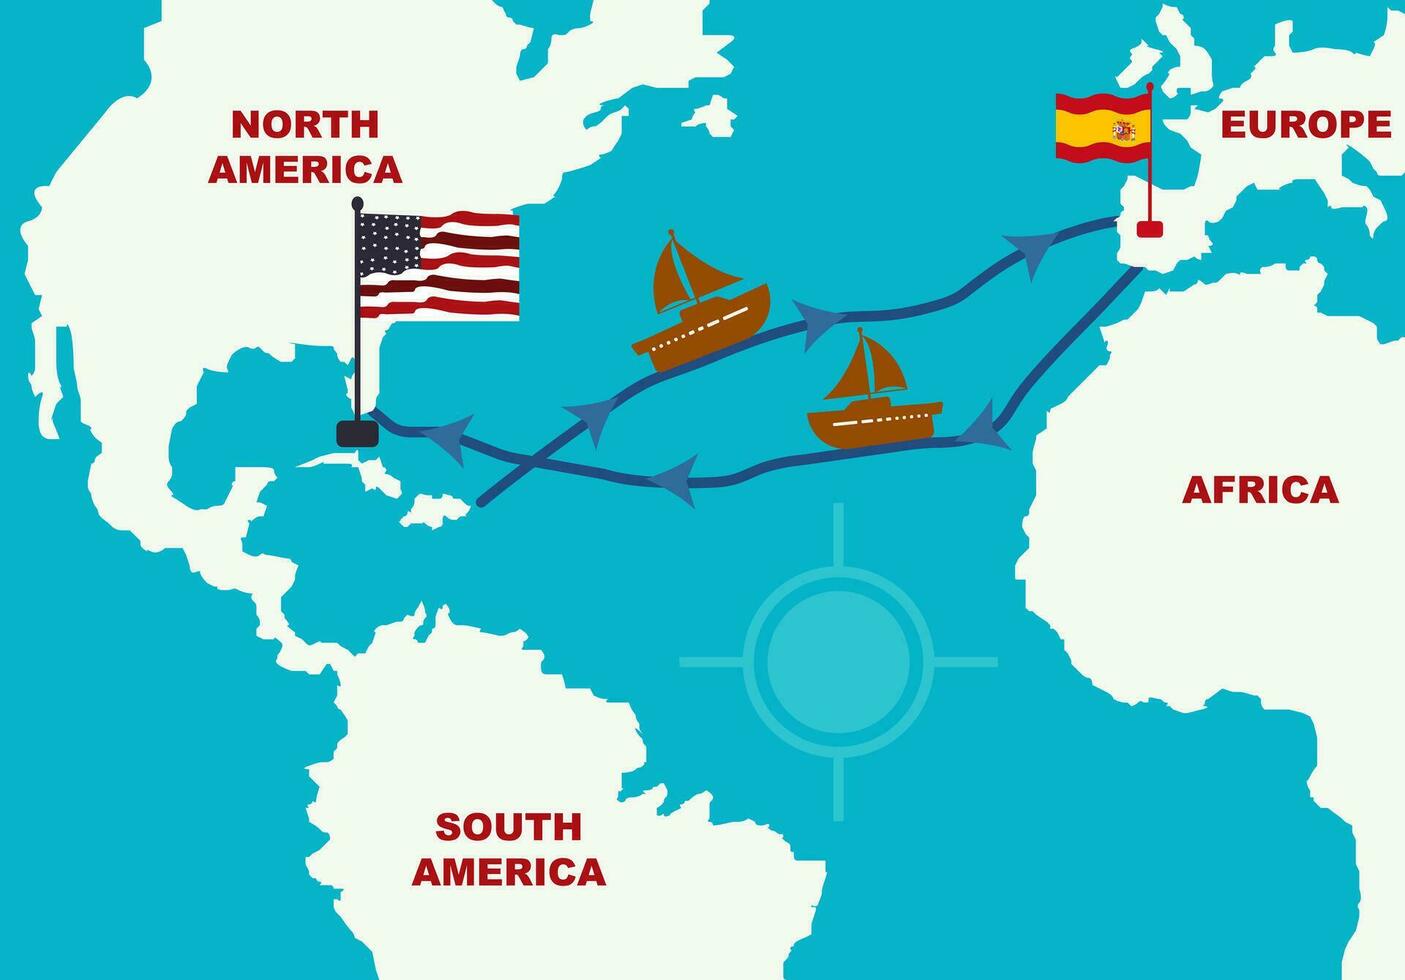 Kolumbus Routen Karte von Europa zu Amerika. Welt Karte mit Kolumbus Route Segeln Schiff. Kolumbus Tag Infografik Entdeckung von Amerika. Spanien zu Amerika Segelboot Reisen von christopher Kolumbus. Flagge. vektor